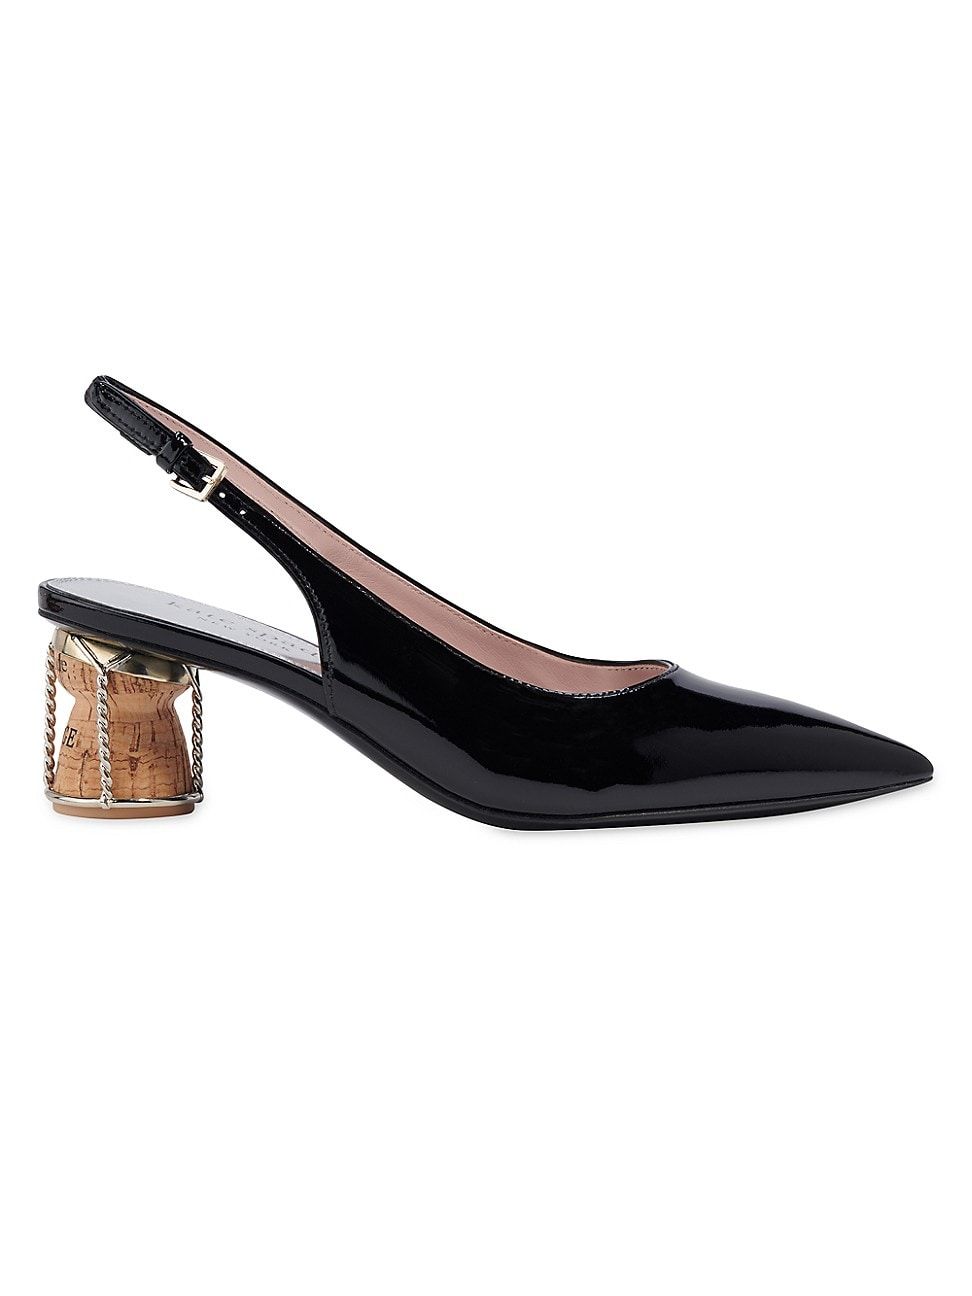 Women's Soiree Patent Leather Cork-Heel Pumps - Black - Size 5.5 | Saks Fifth Avenue